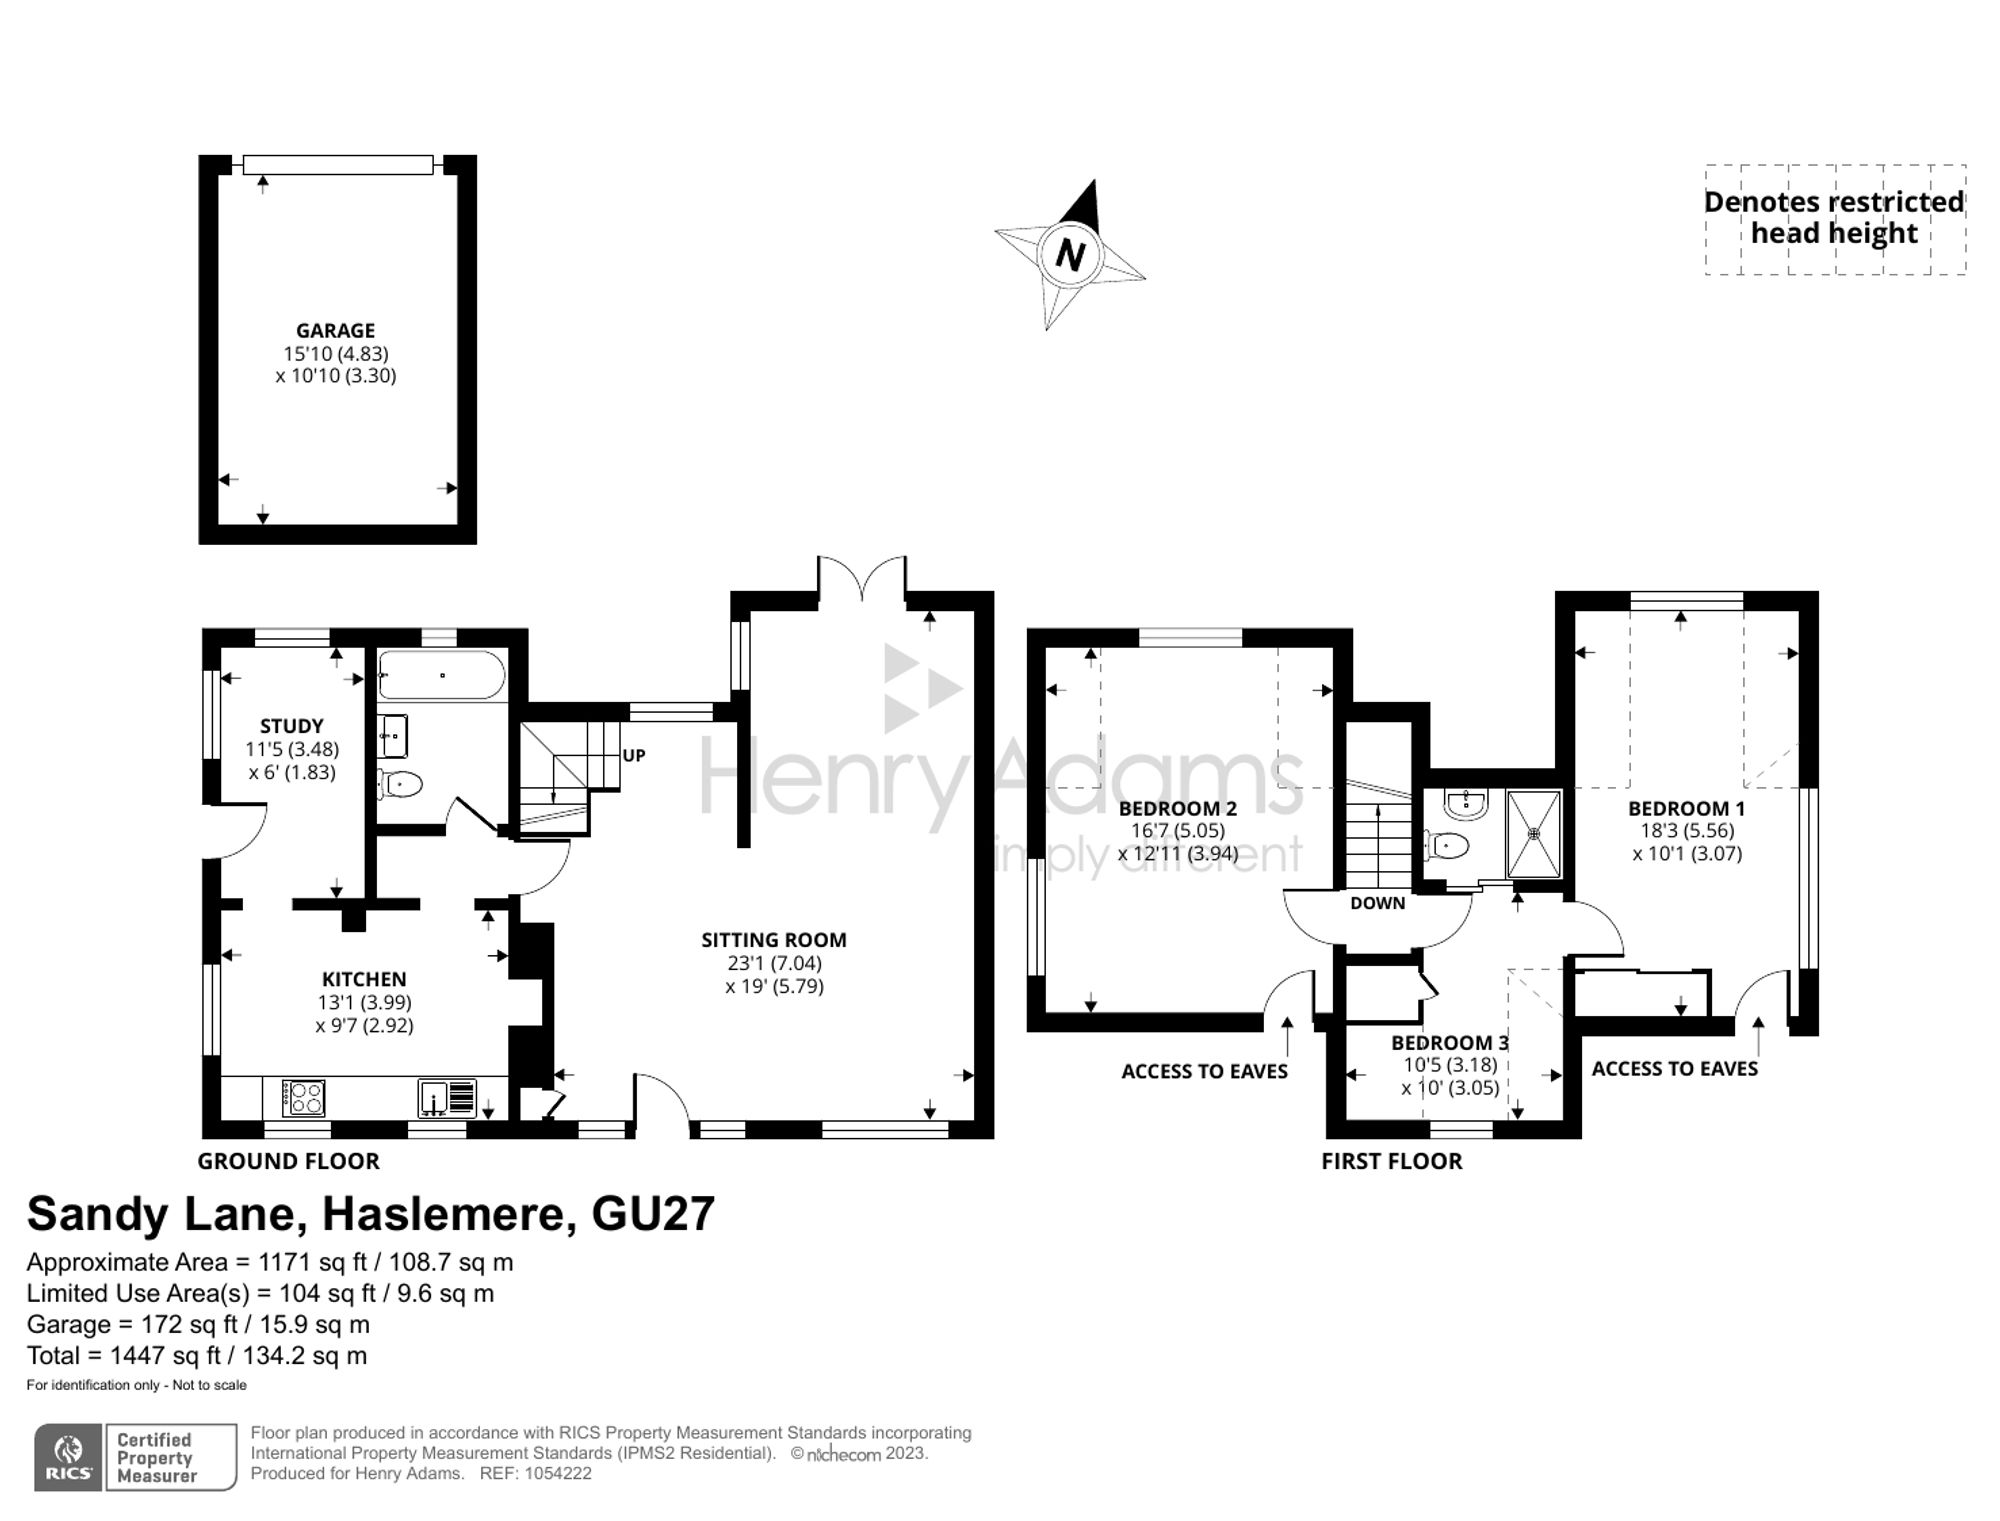 Sandy Lane, Haslemere, GU27 floorplans